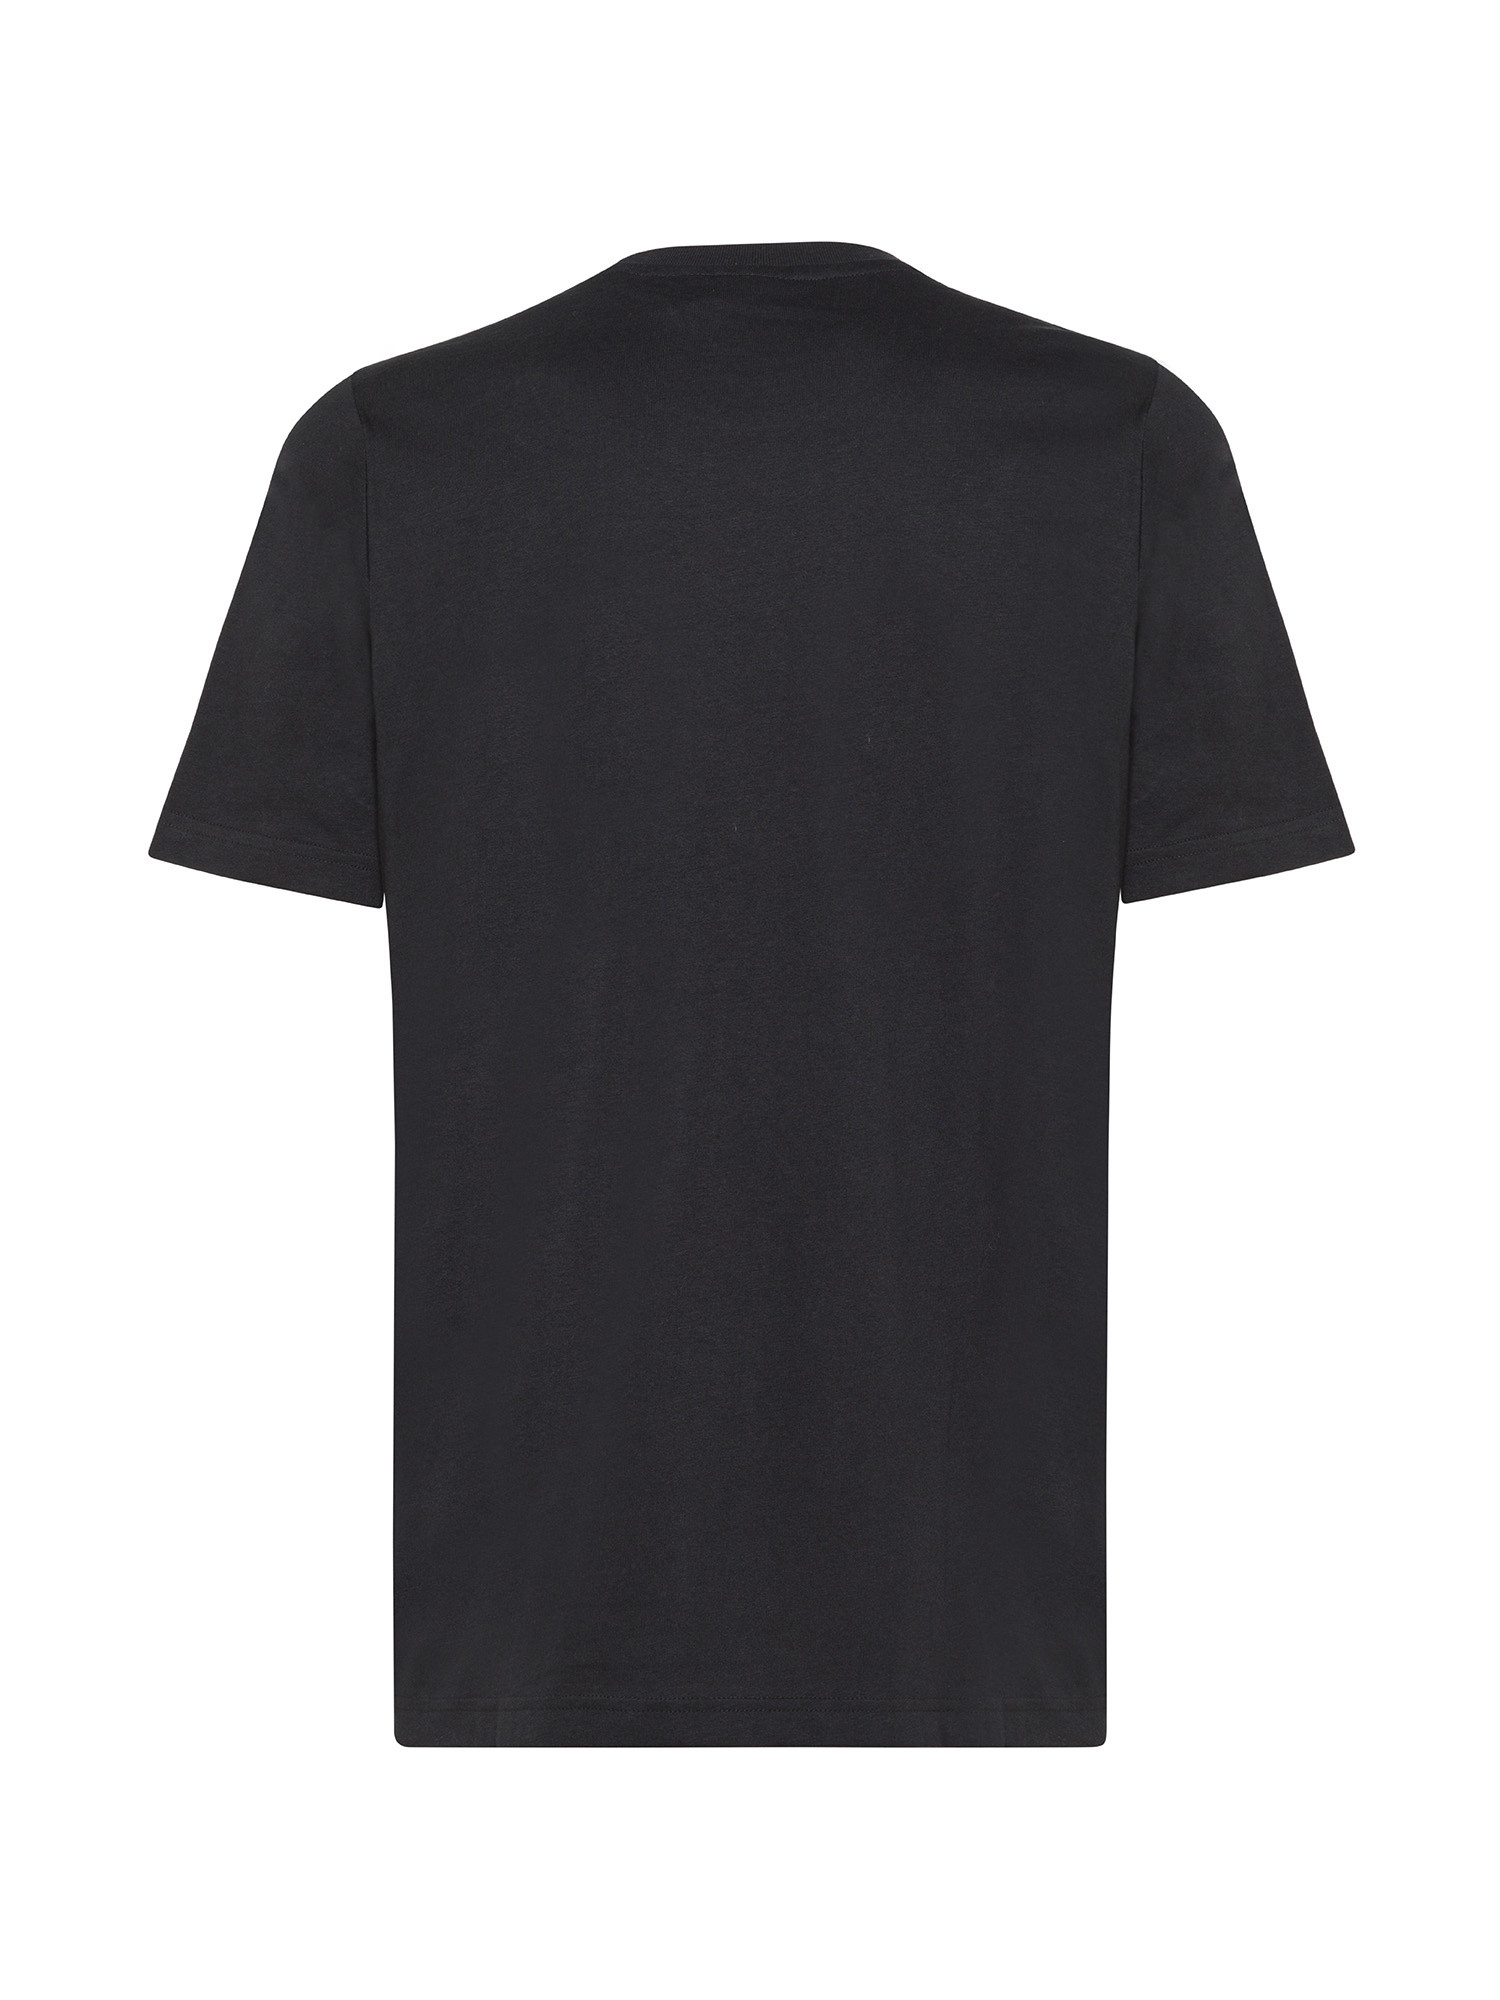 Adidas - T-shirt graphic Camo, Nero, large image number 1